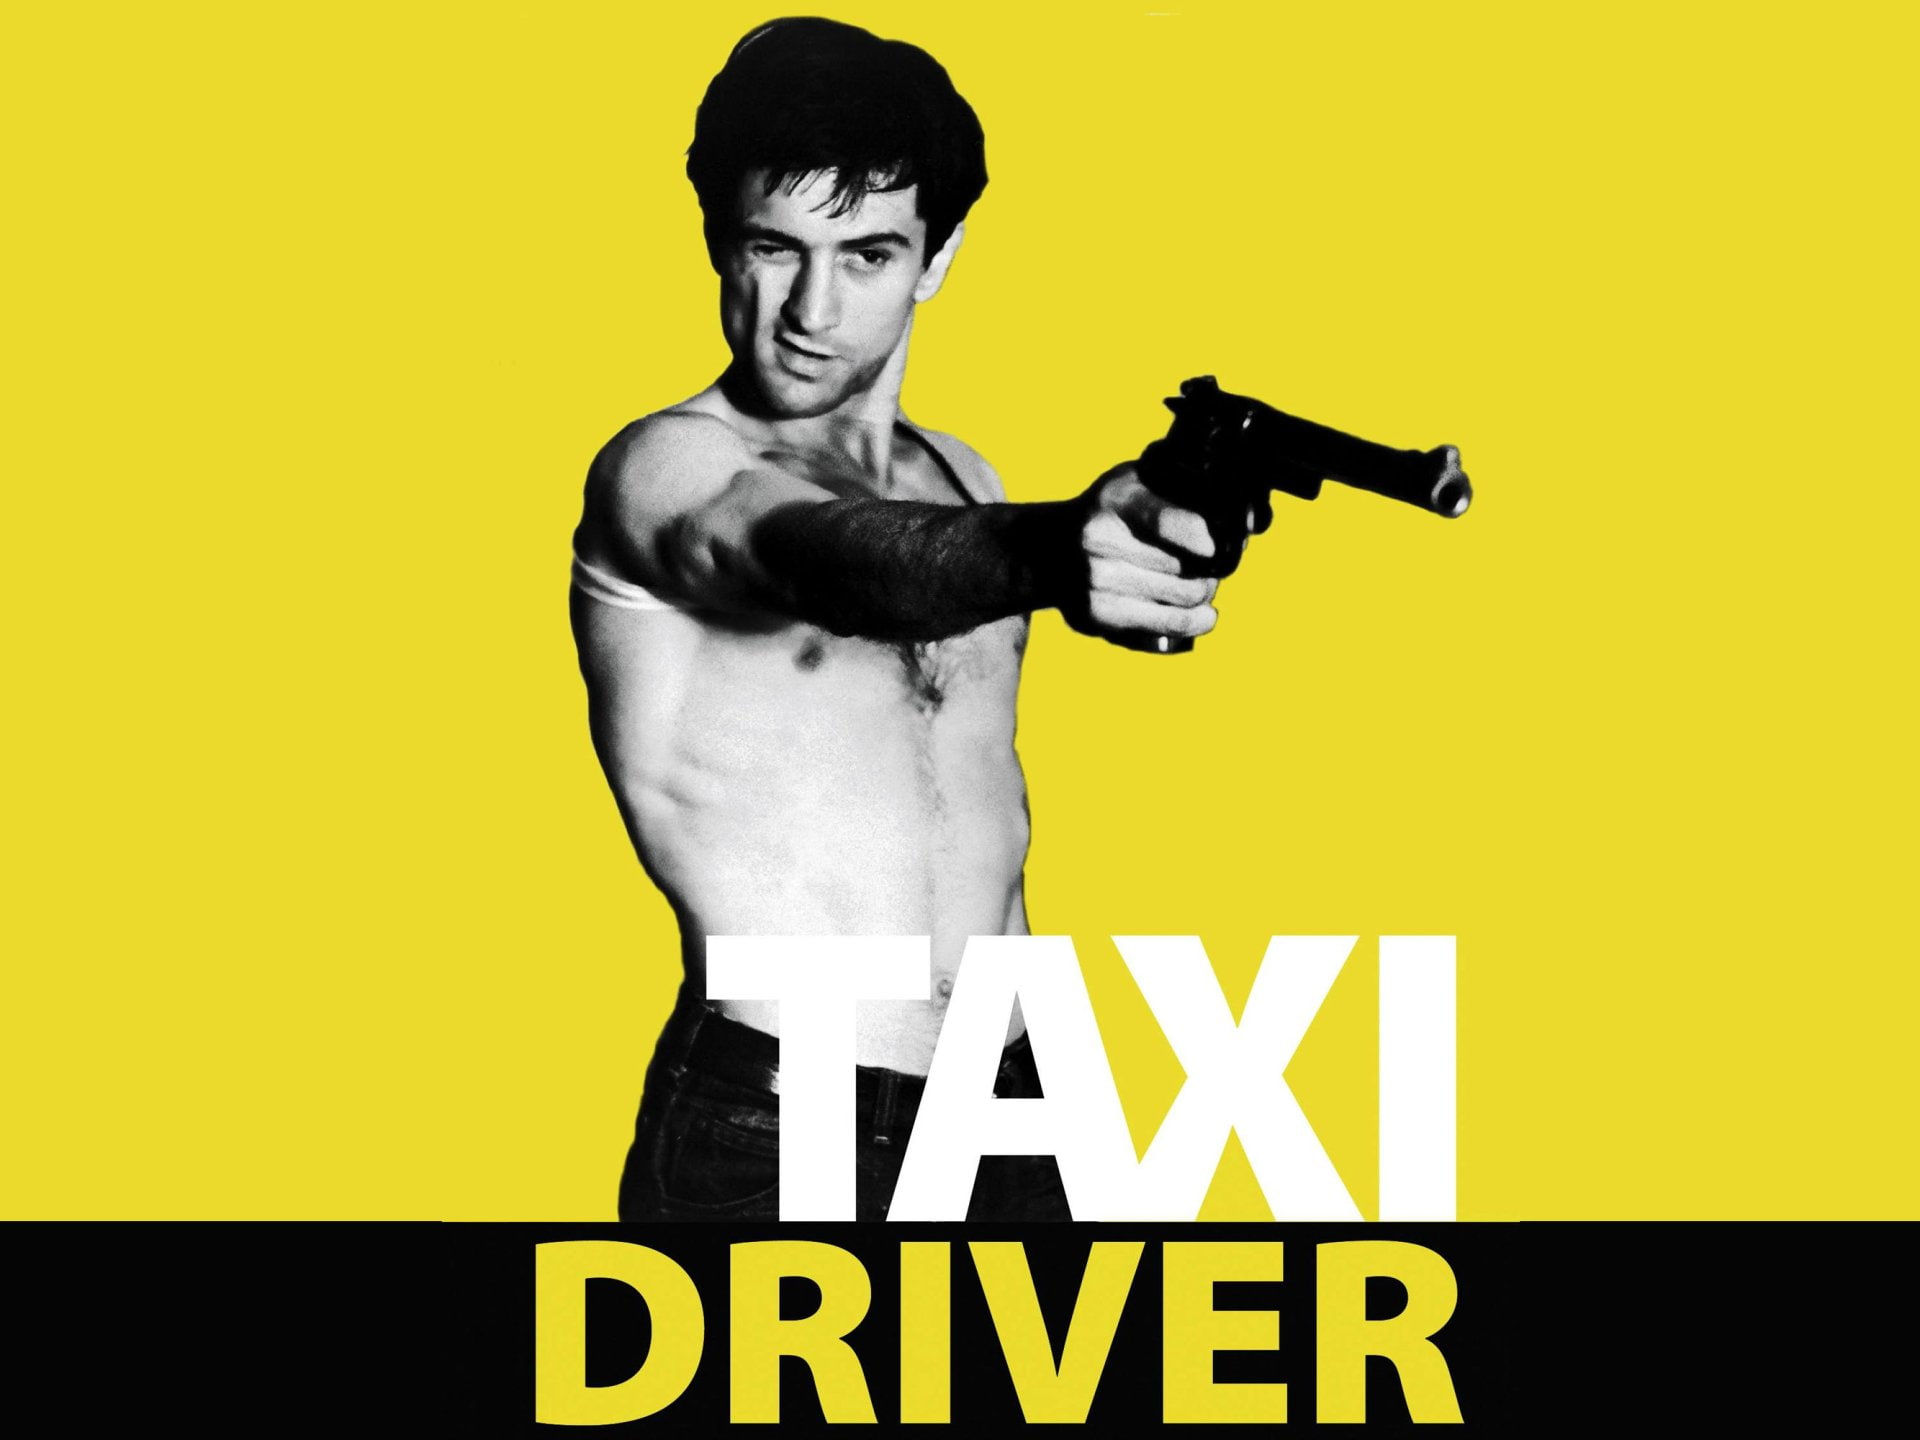 Movie, Taxi Driver, Gun, Man, Robert De Niro, yellow, sign